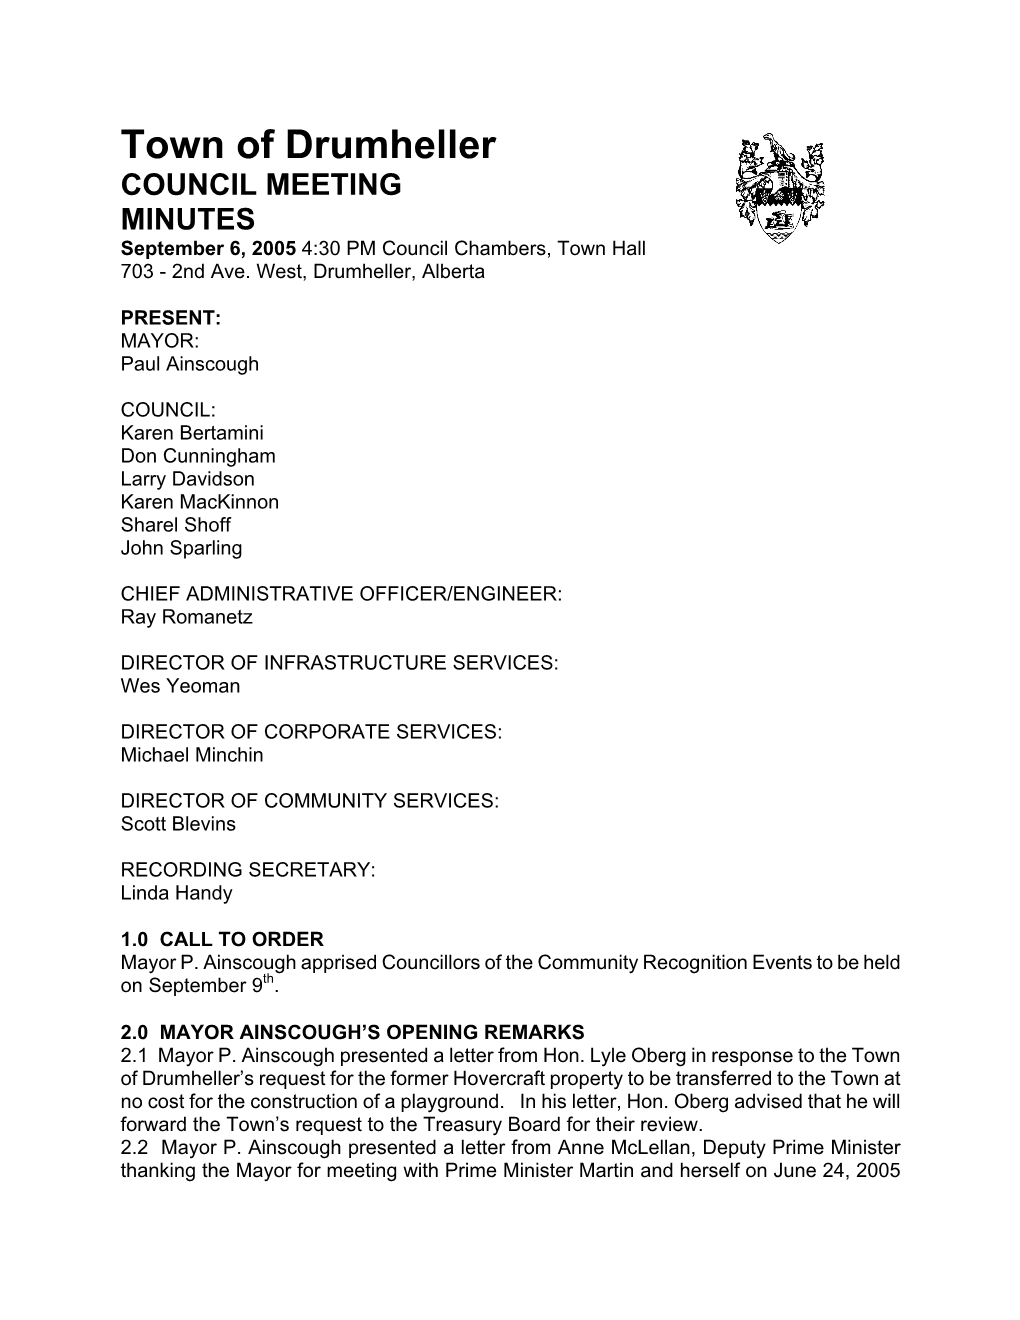 Council Meeting Sep 06 05